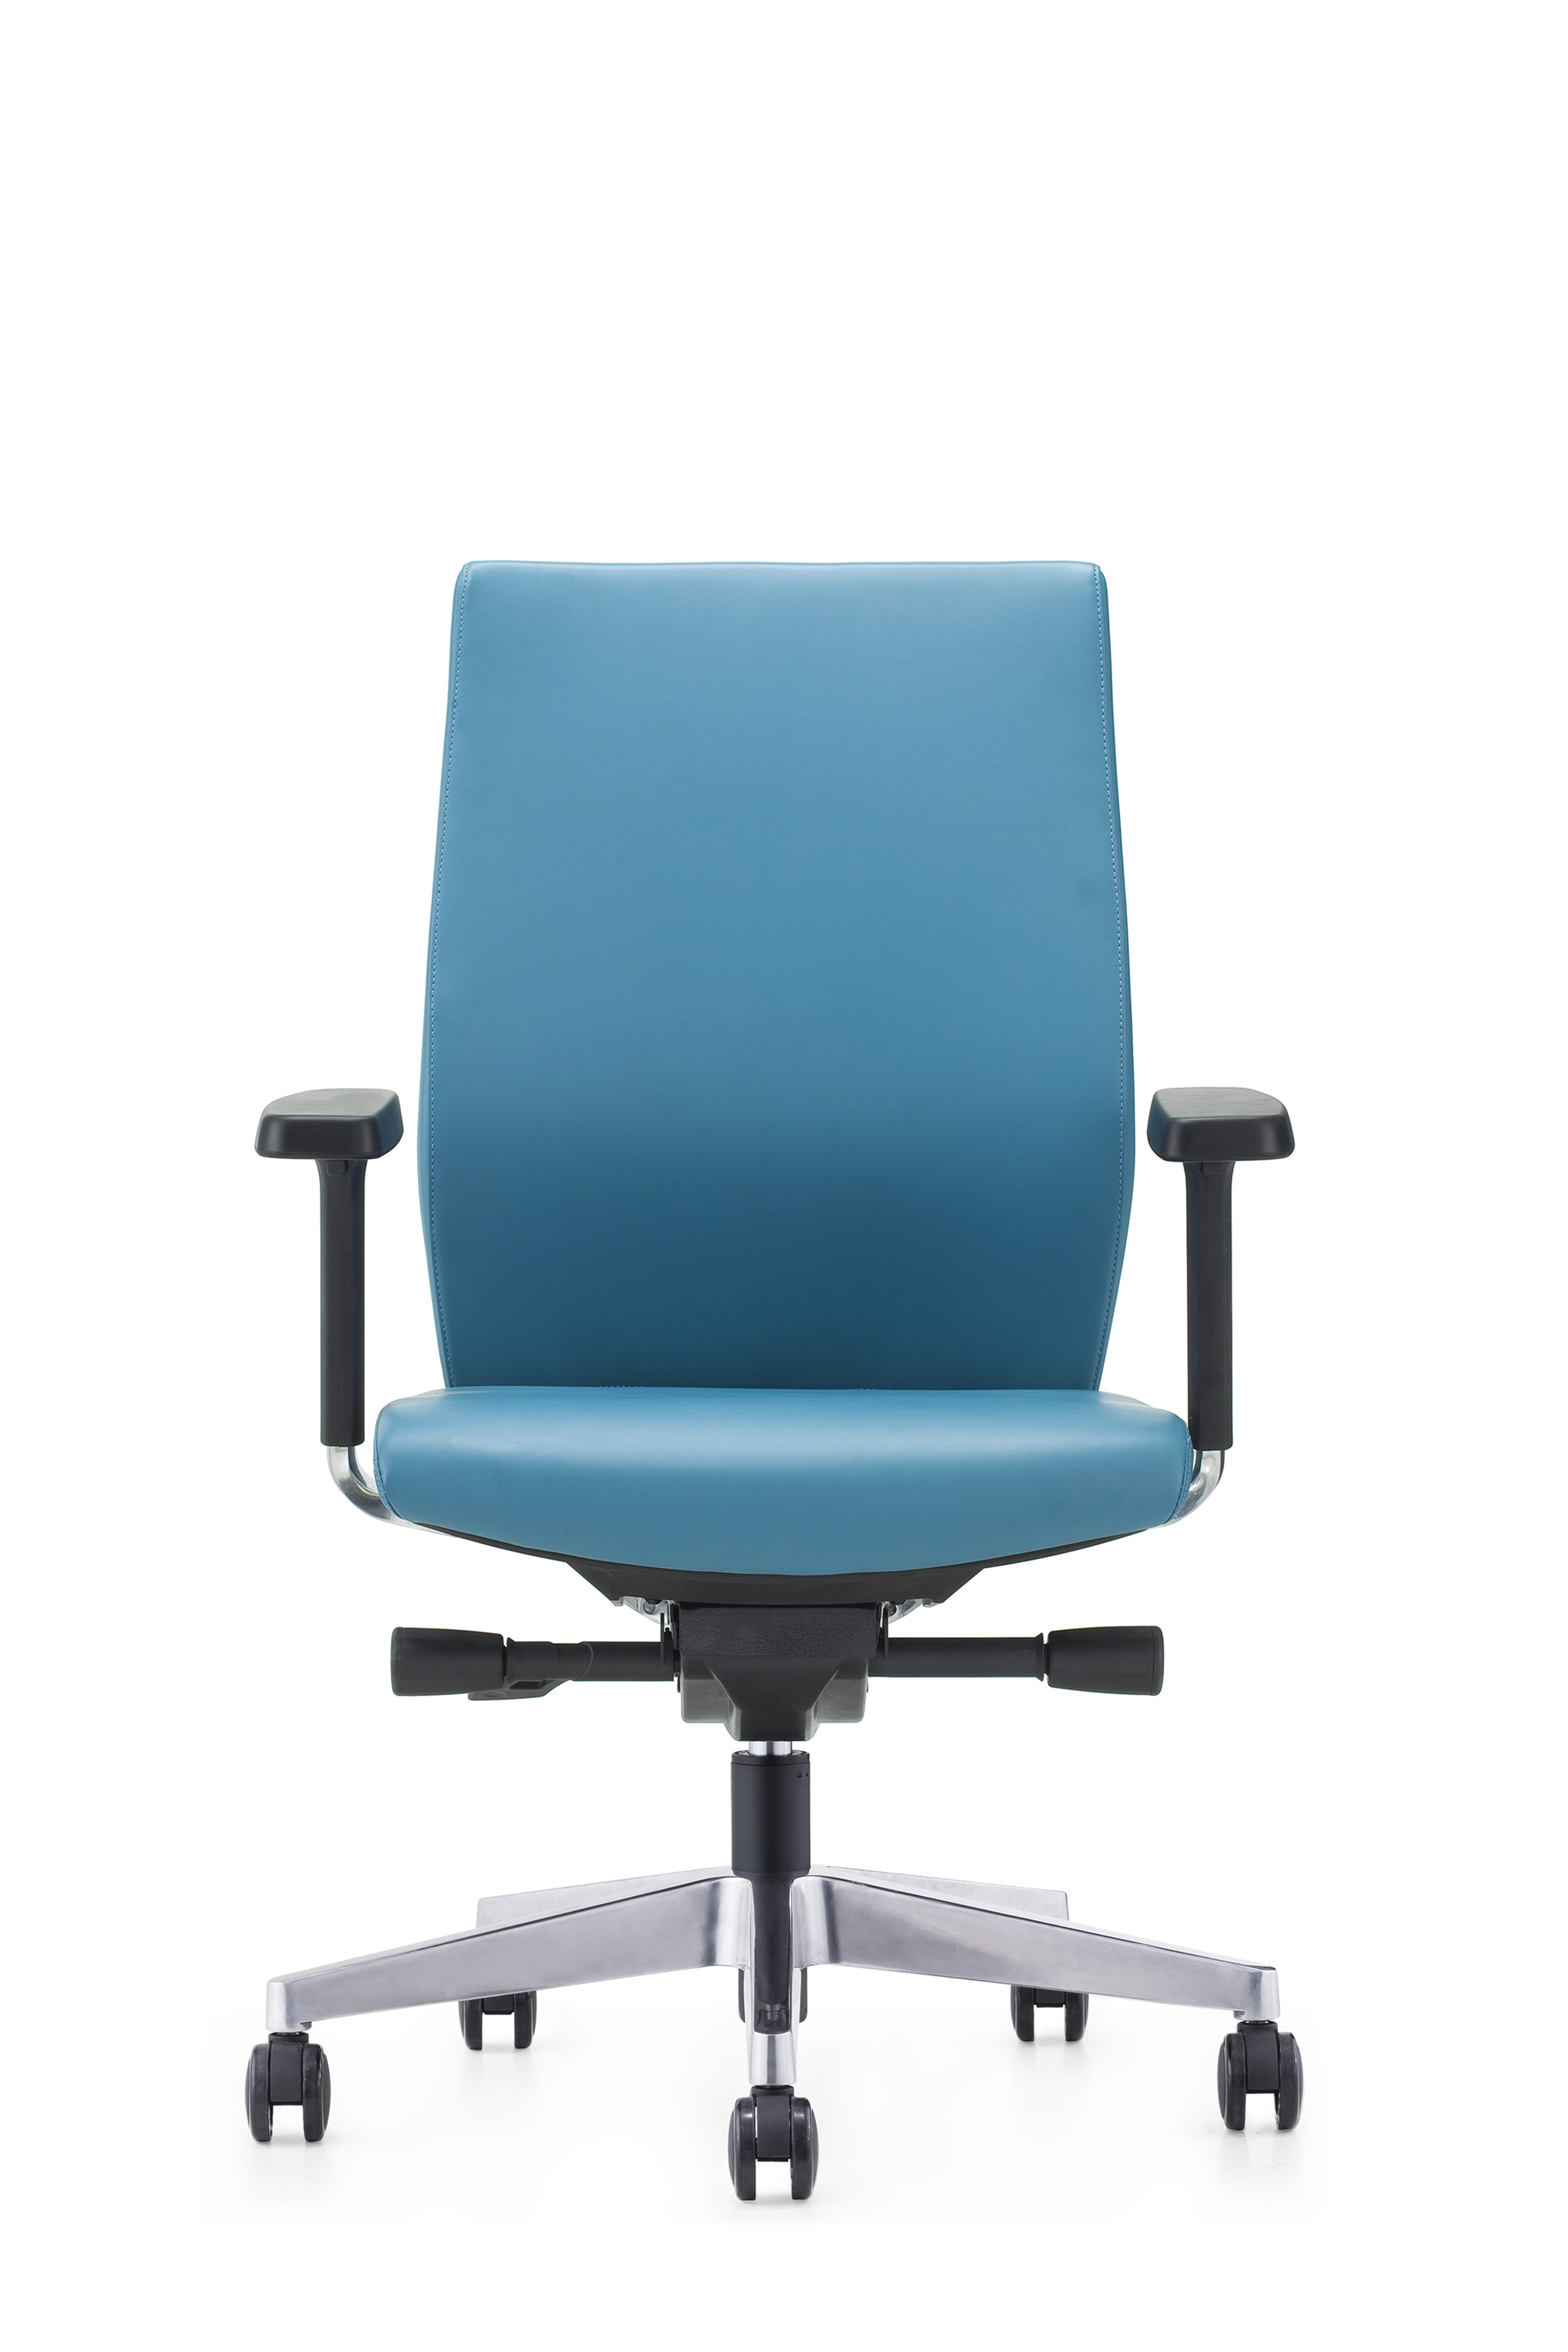 Original Factory Blue Ottoman Chair - CH-240B – SitZone